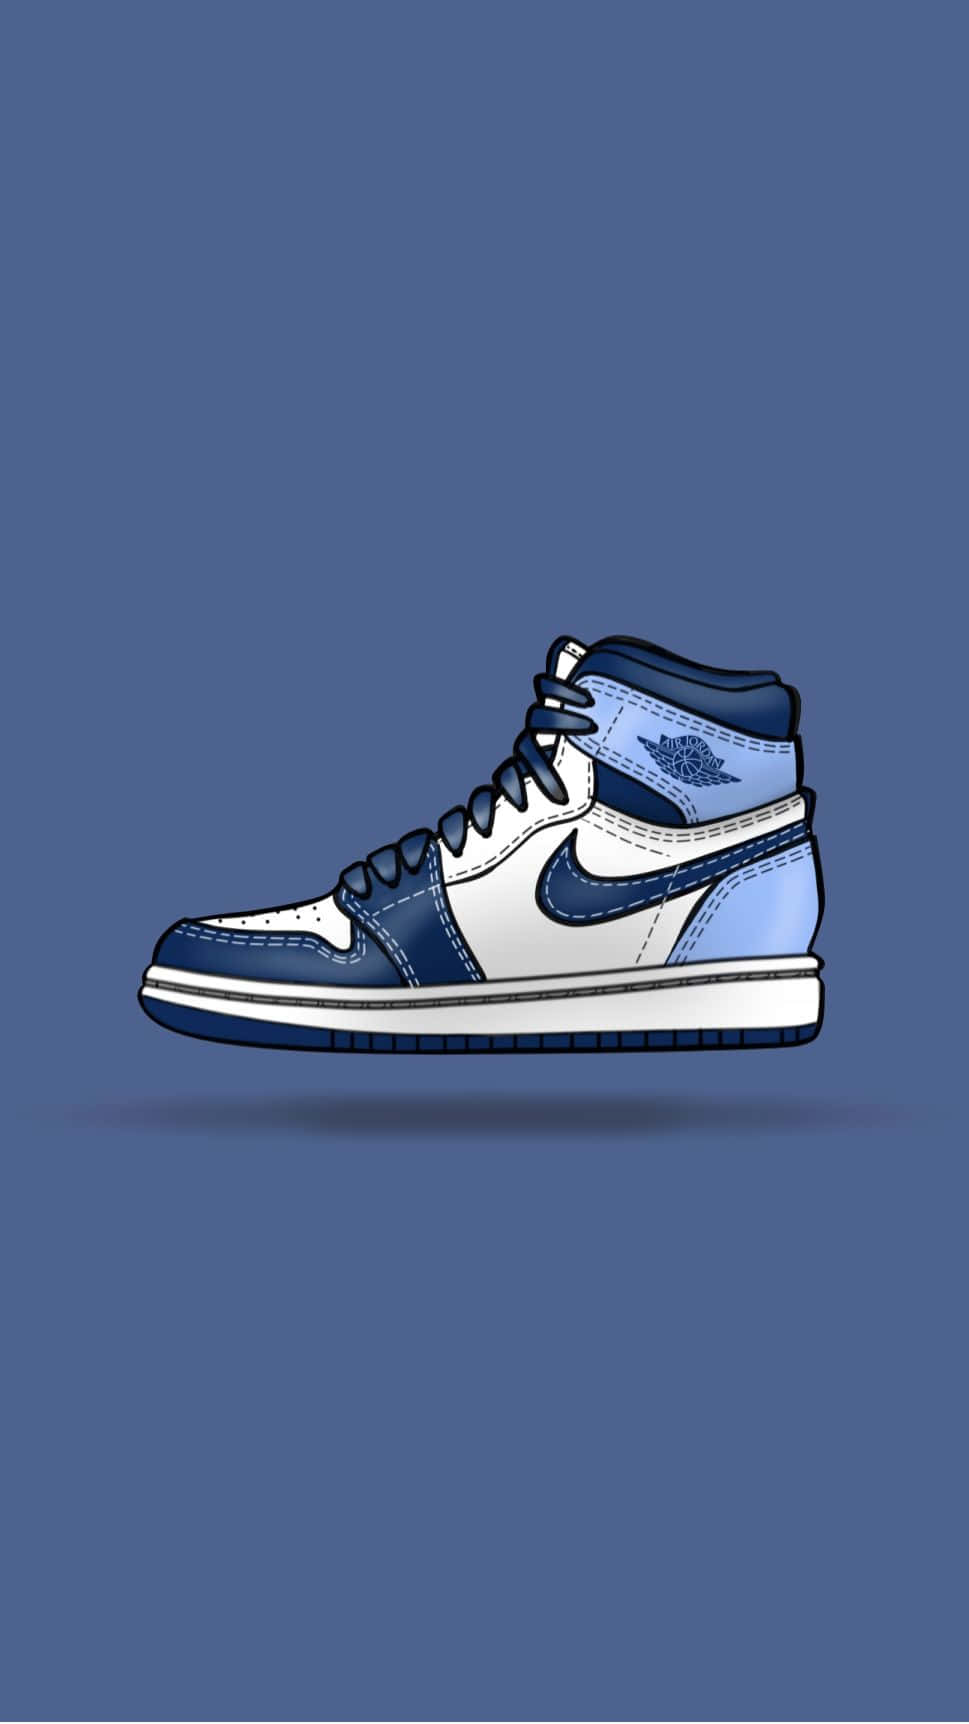 Svävandeblå Nike Jordan Air-sko. Wallpaper